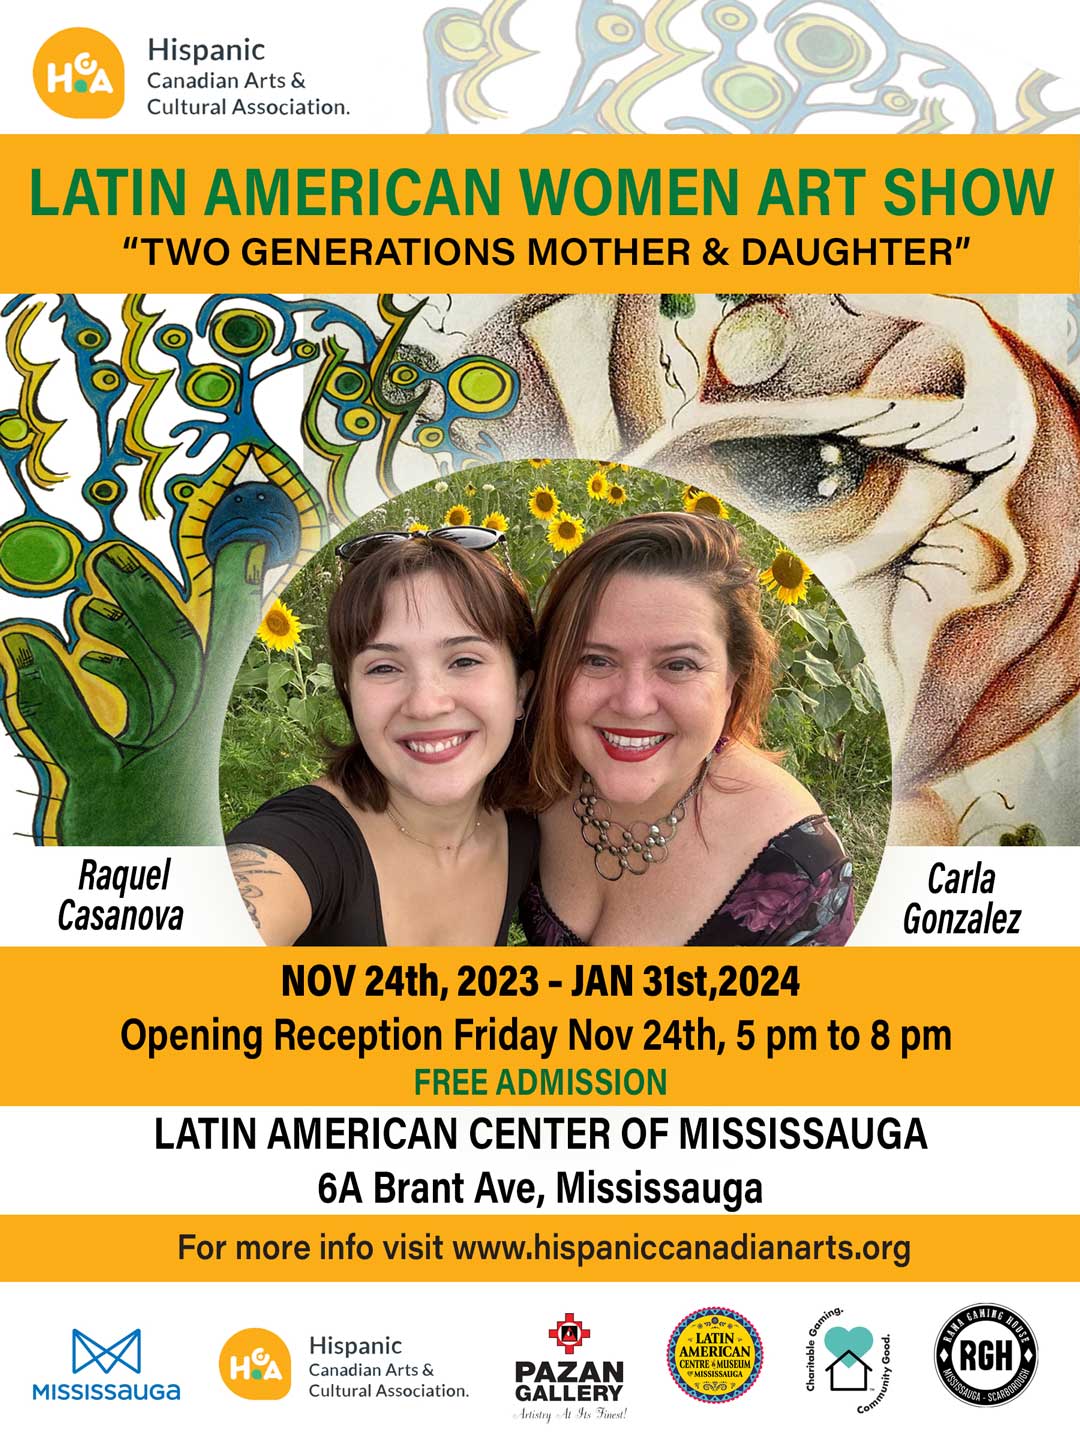 Latin American Women Art Show, November 24, 2023